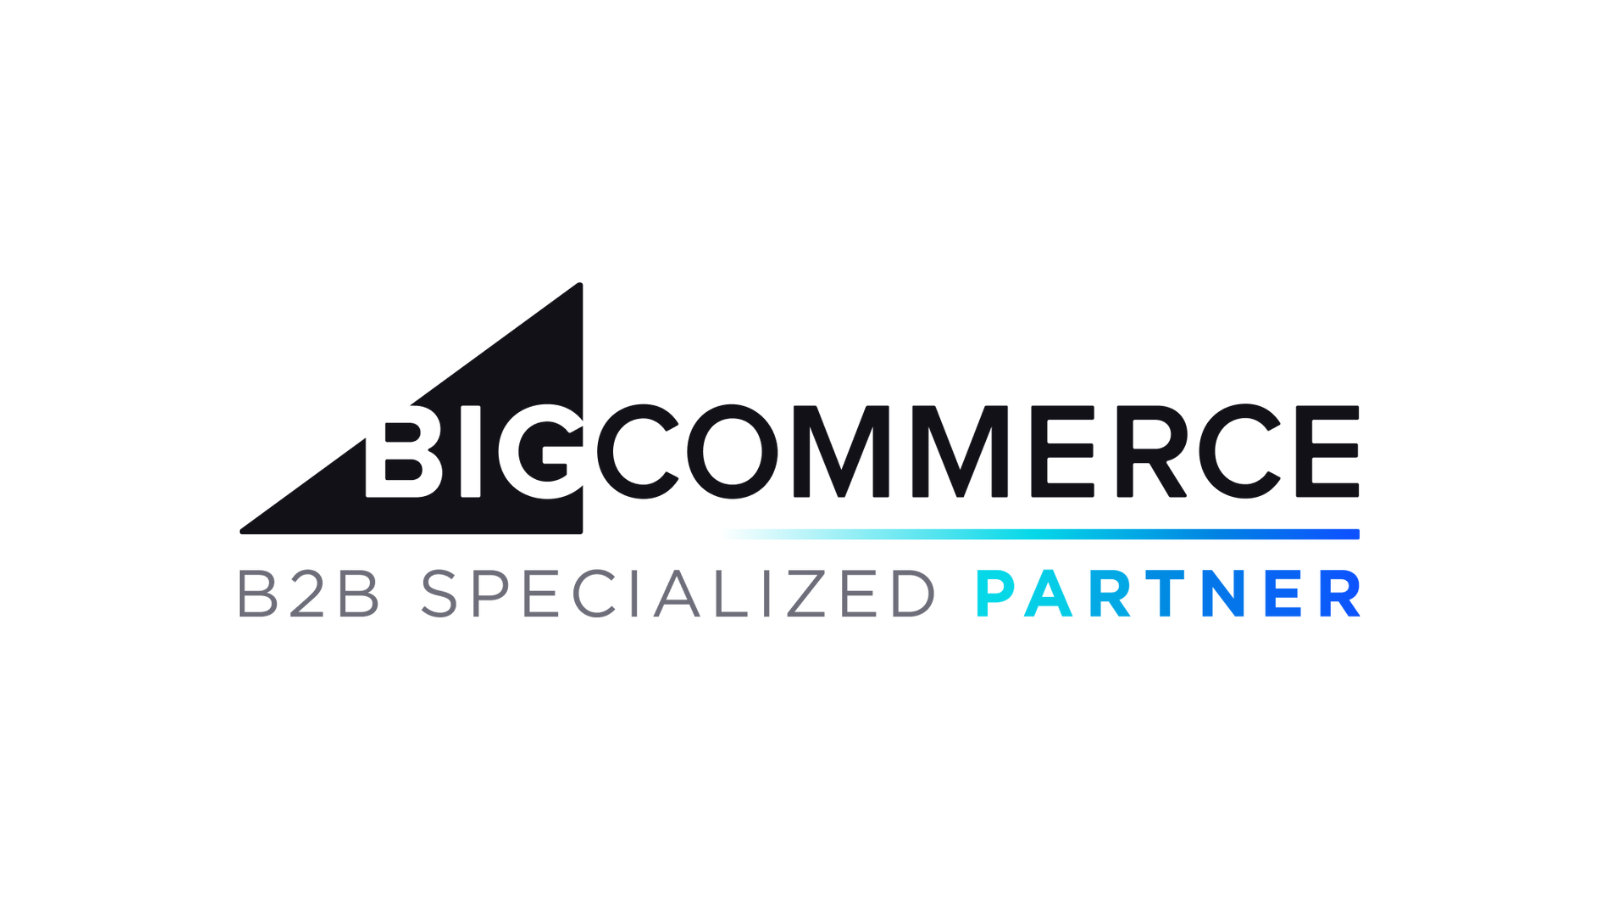 cti digital BigCommerce B2B Specialised Agency Partner blog header